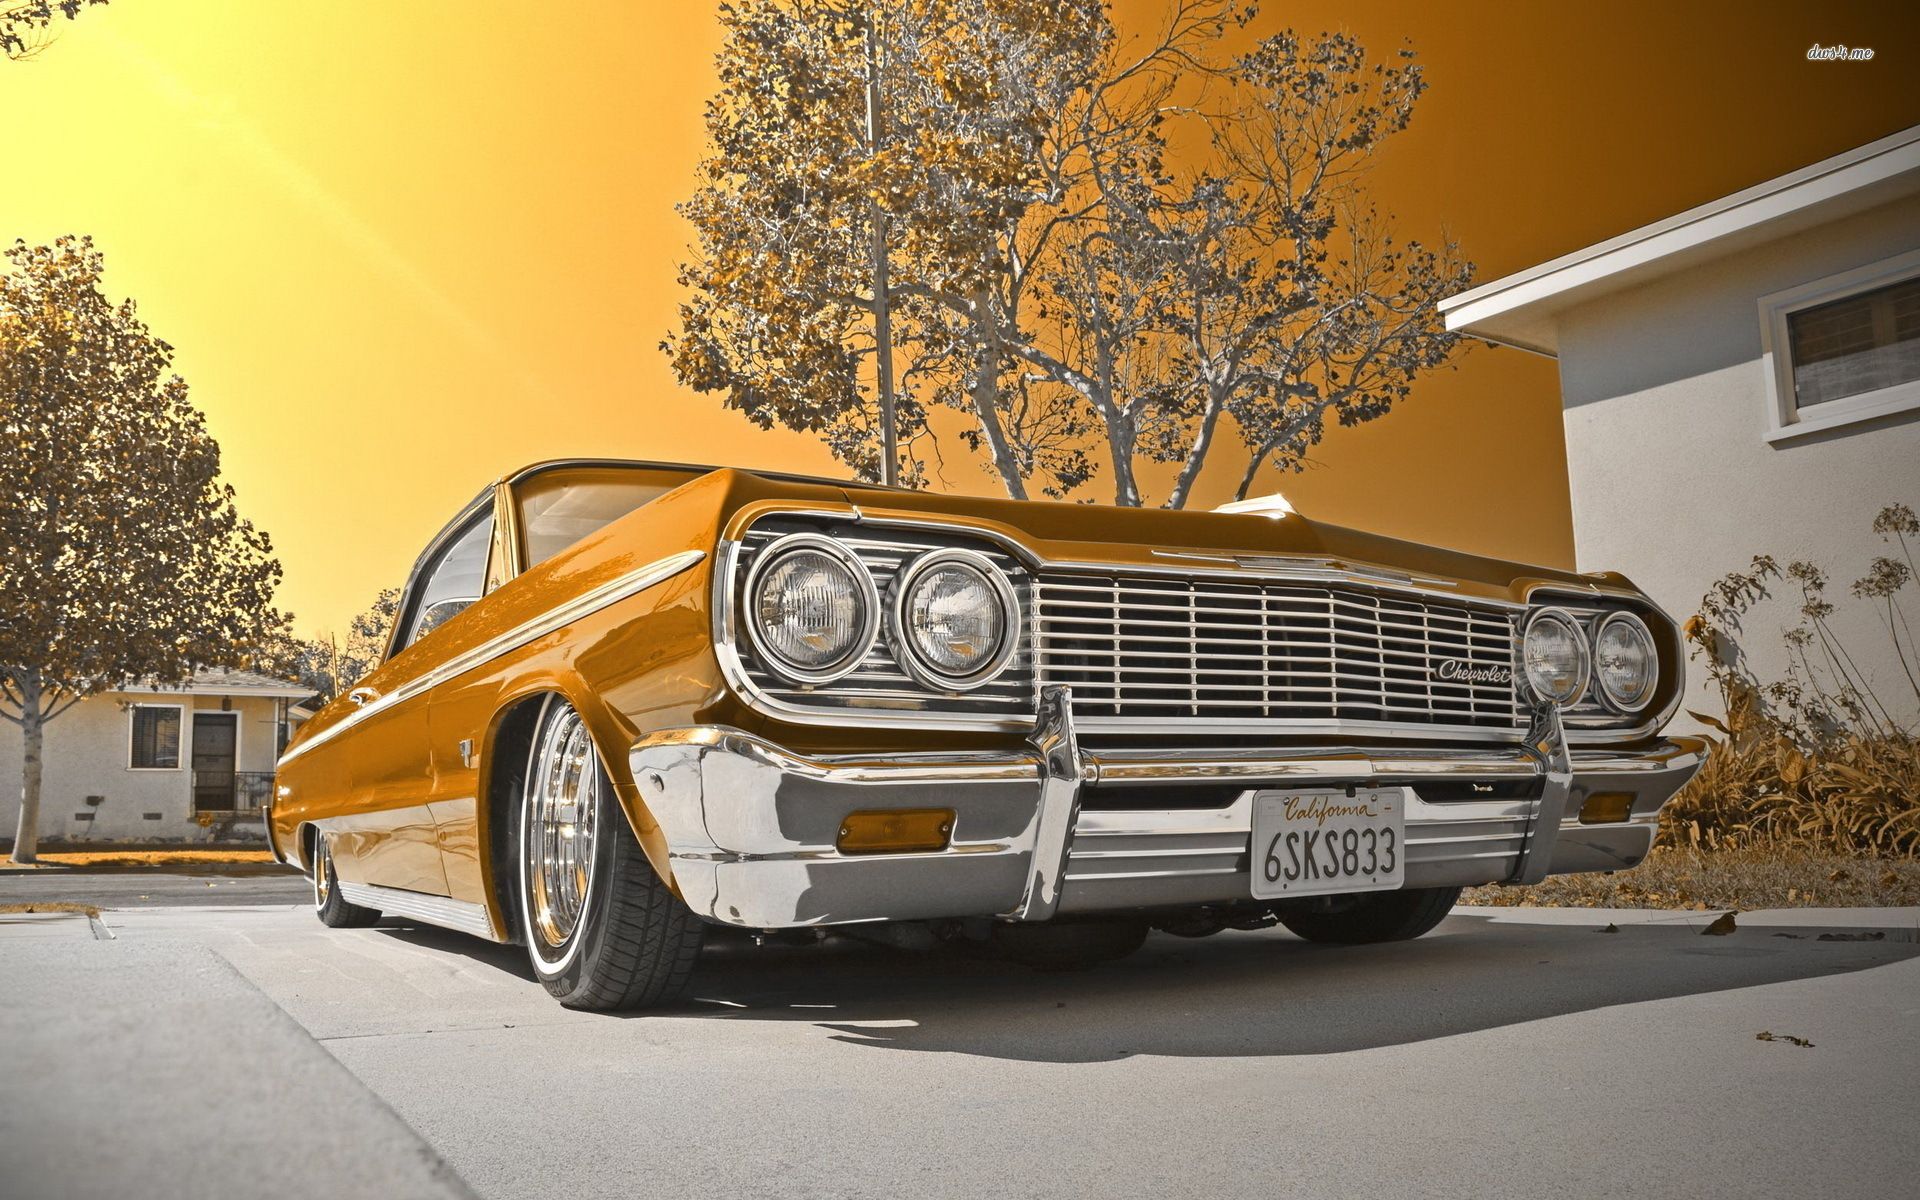 Lowrider Chevrolet Impala wallpaper - Car wallpapers - #17734